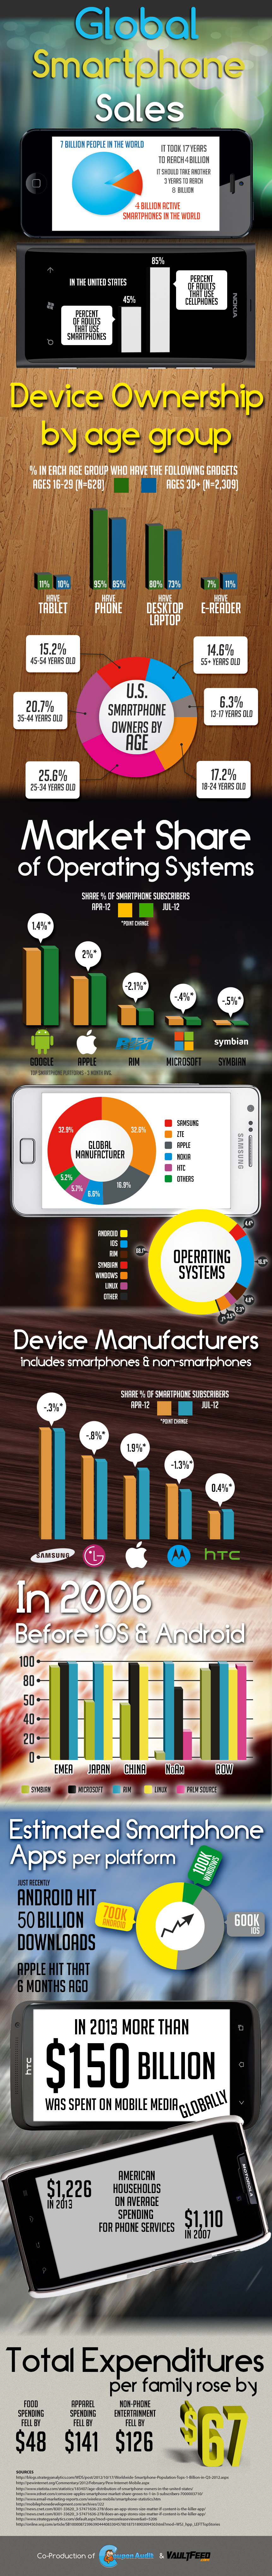 Global-Smartphone-Sales5